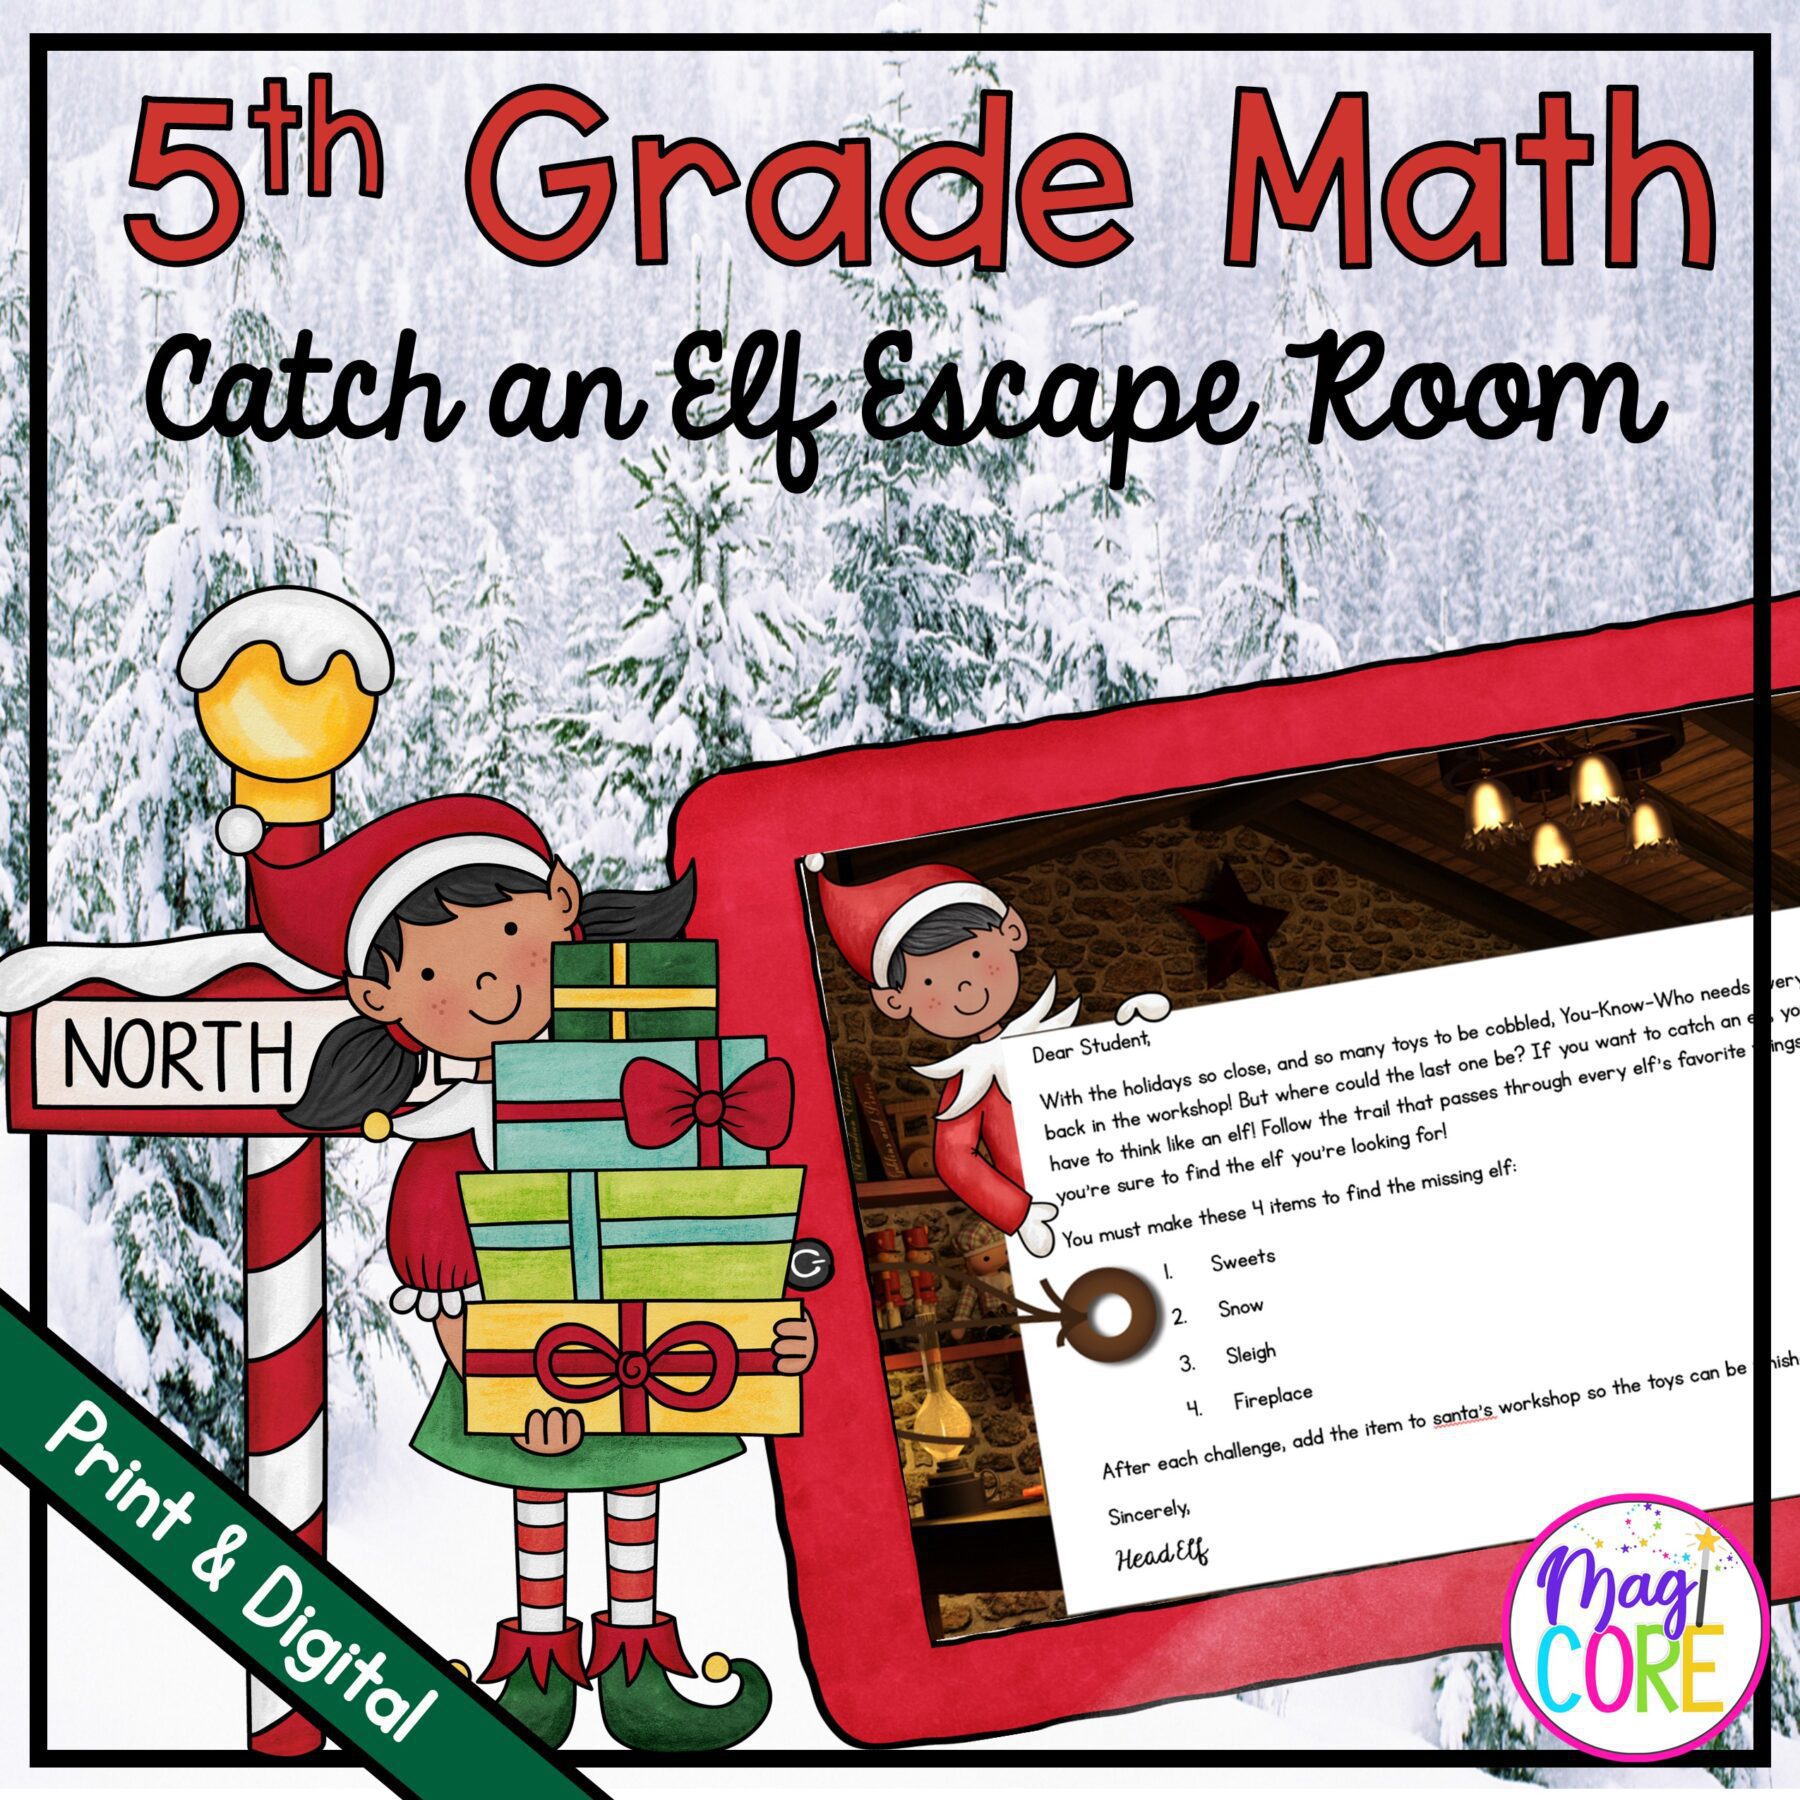 5th Grade Math Catch an Elf Escape Room